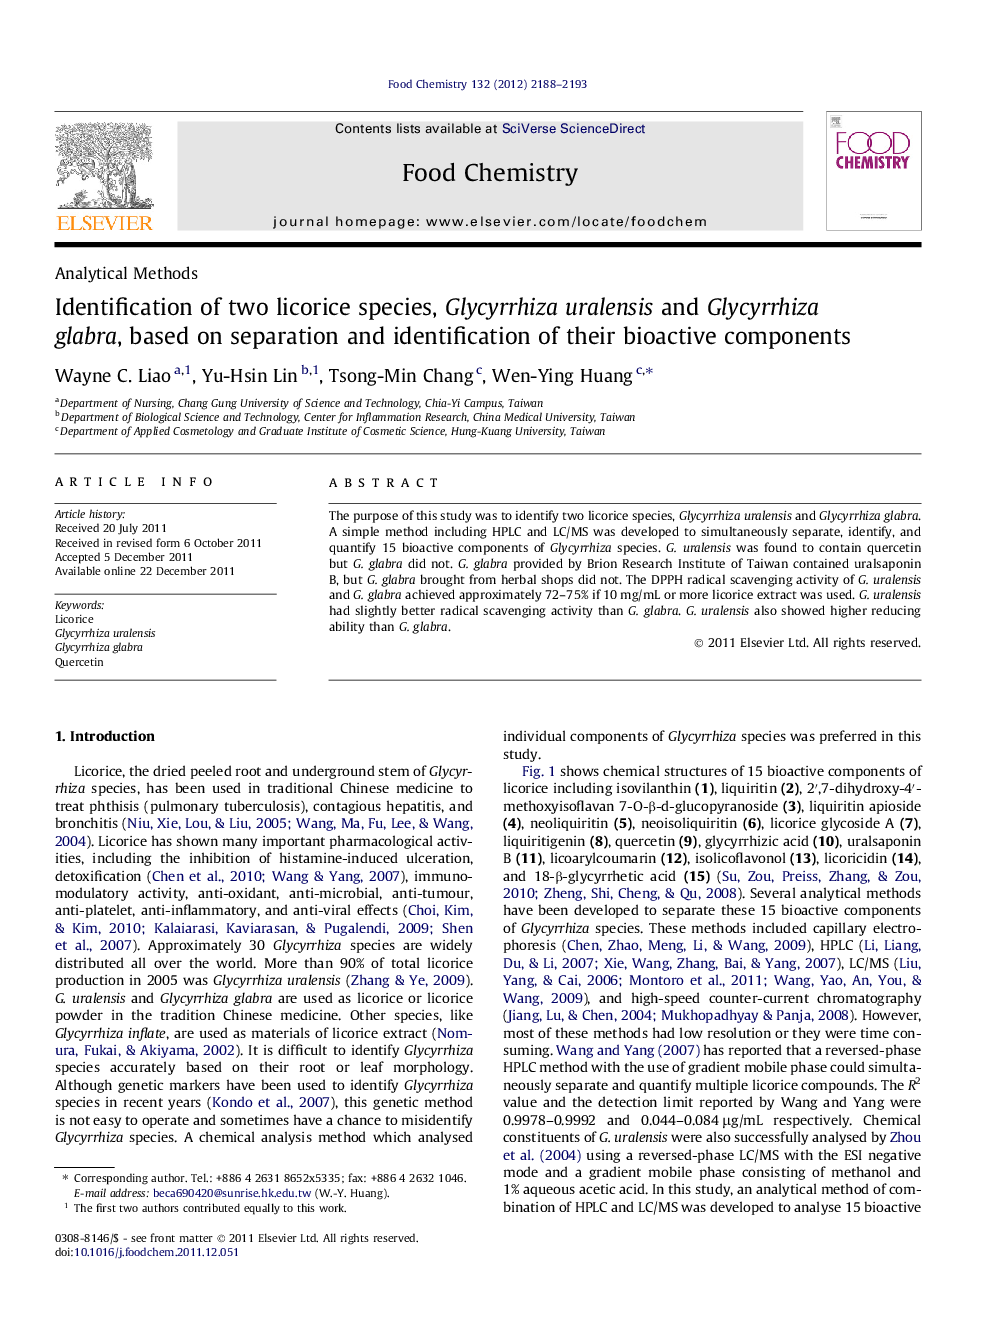 Identification of two licorice species, Glycyrrhiza uralensis and Glycyrrhiza glabra, based on separation and identification of their bioactive components